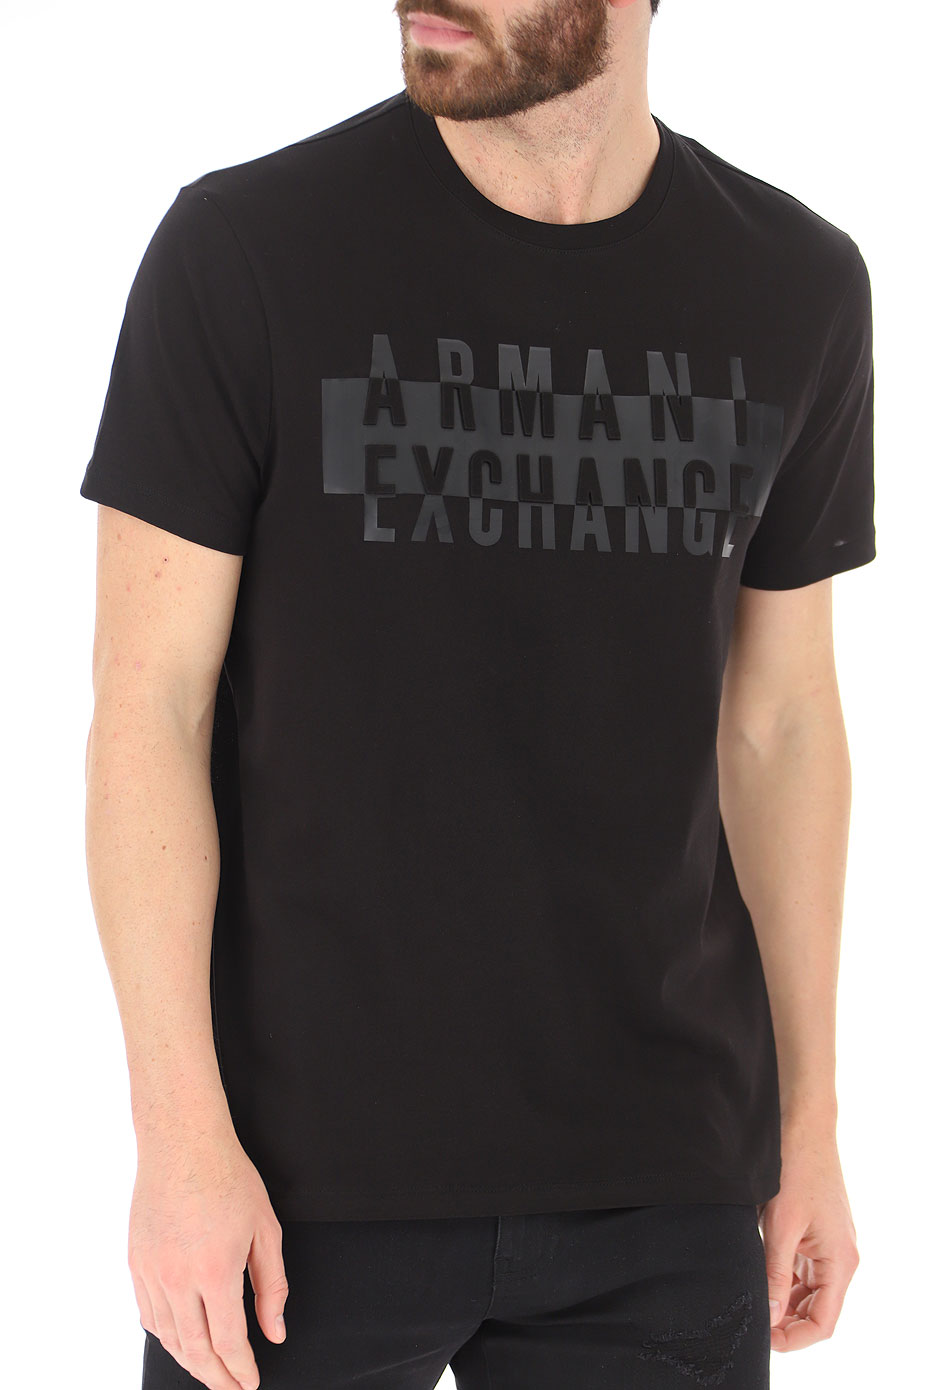 Mens Clothing Armani Exchange, Style code: 6hztgd-zjh4z-1200